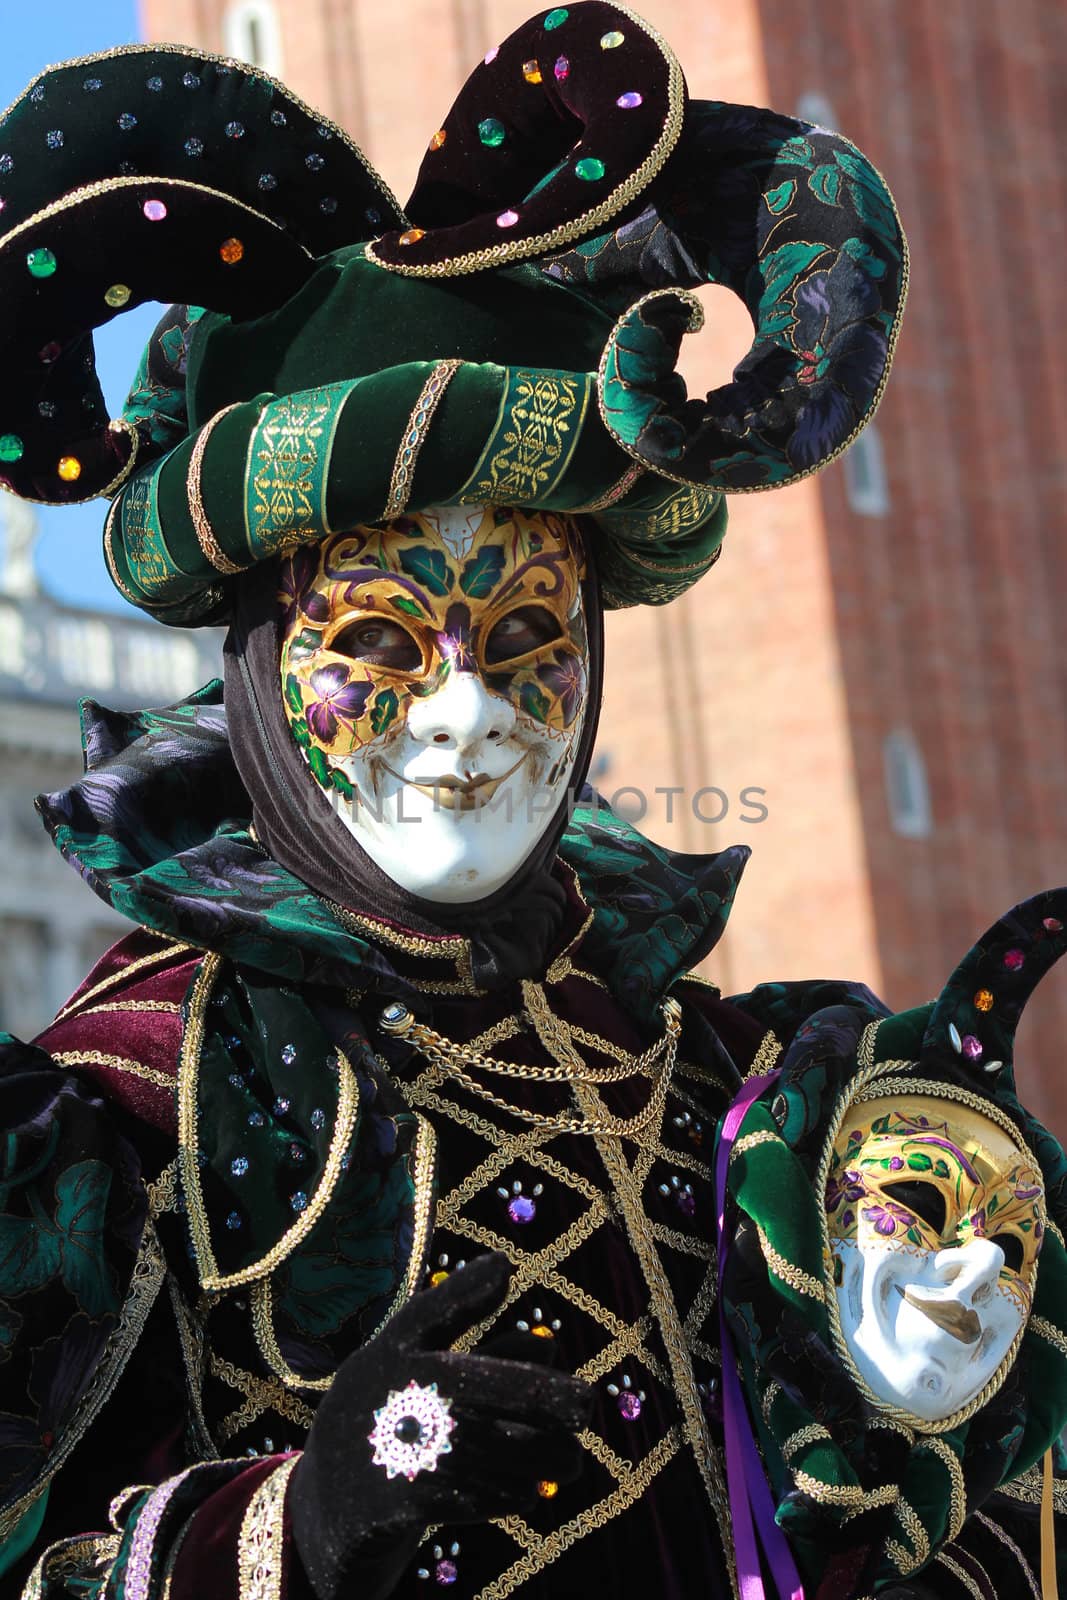 Funny gaze on the green joker mask. Venice carnival 2012 